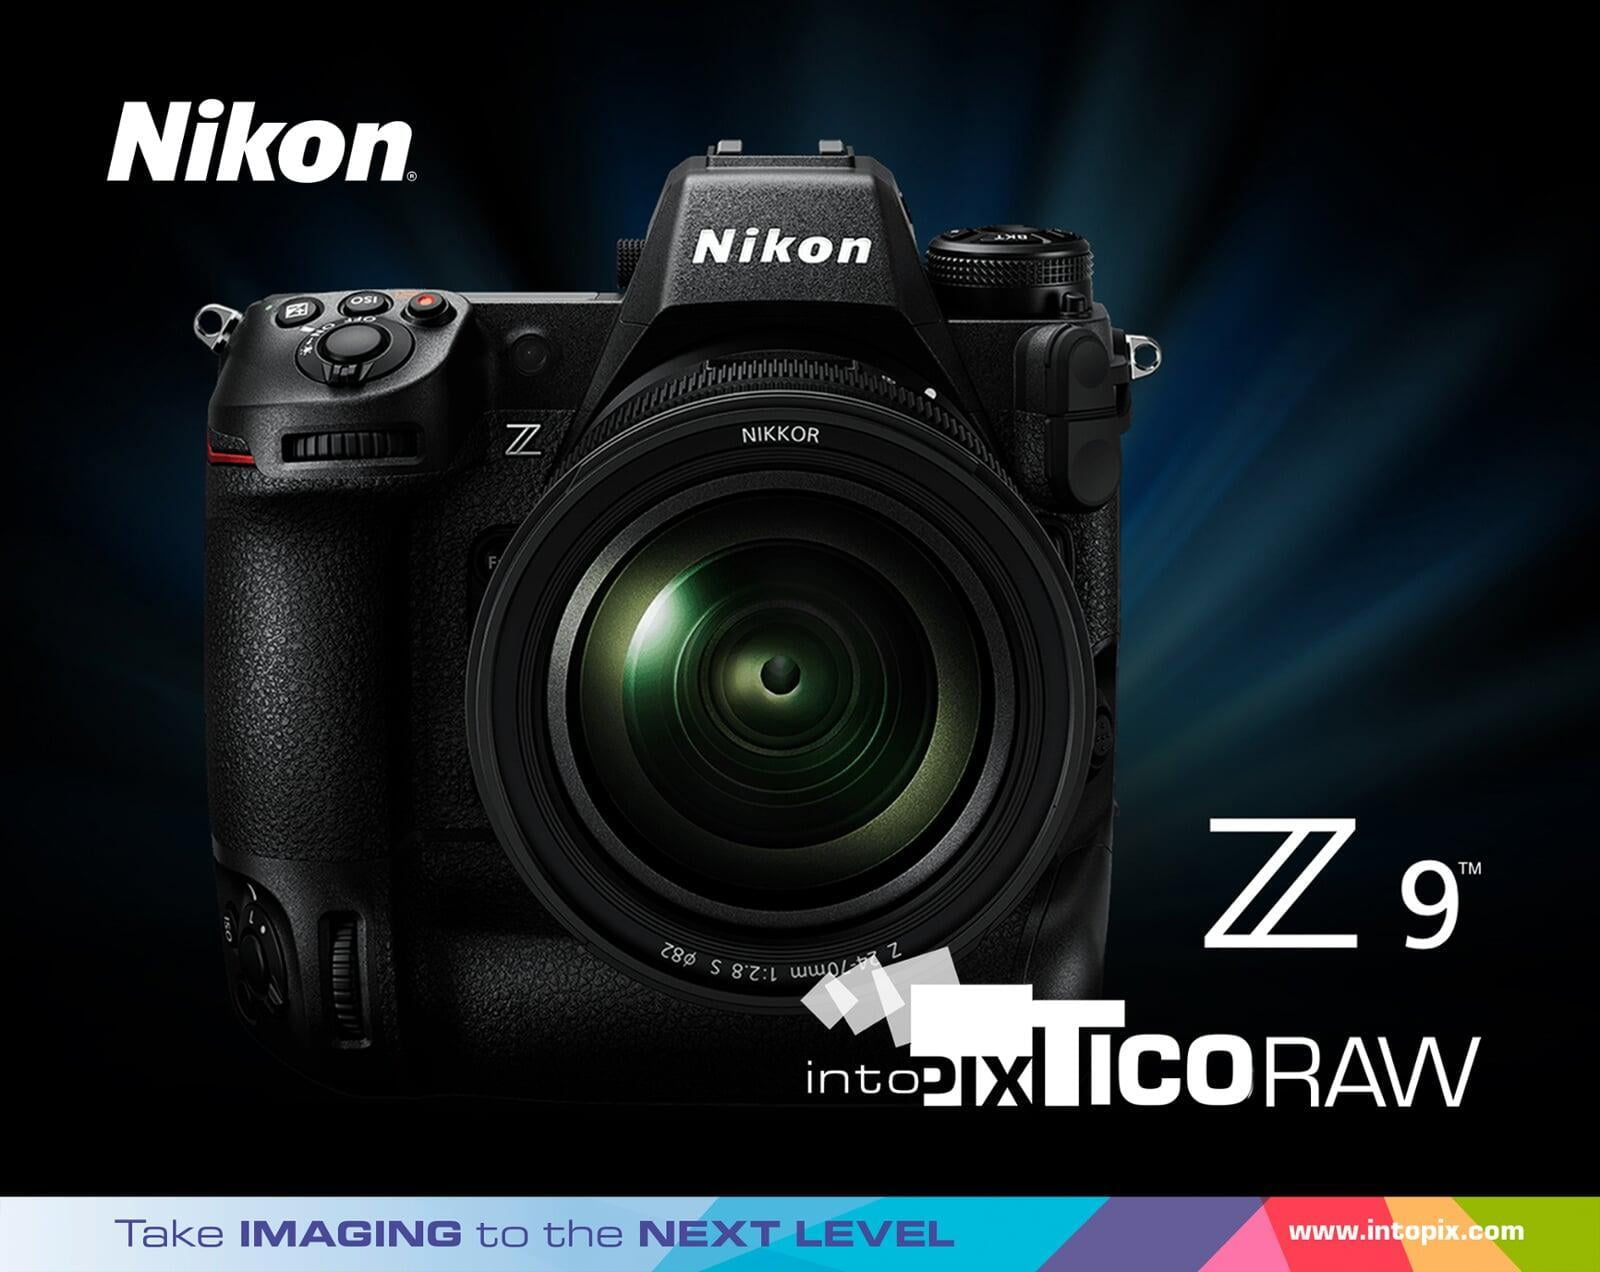 Nikon Z9 and Nikon N-RAW use intoPIX TicoRAW